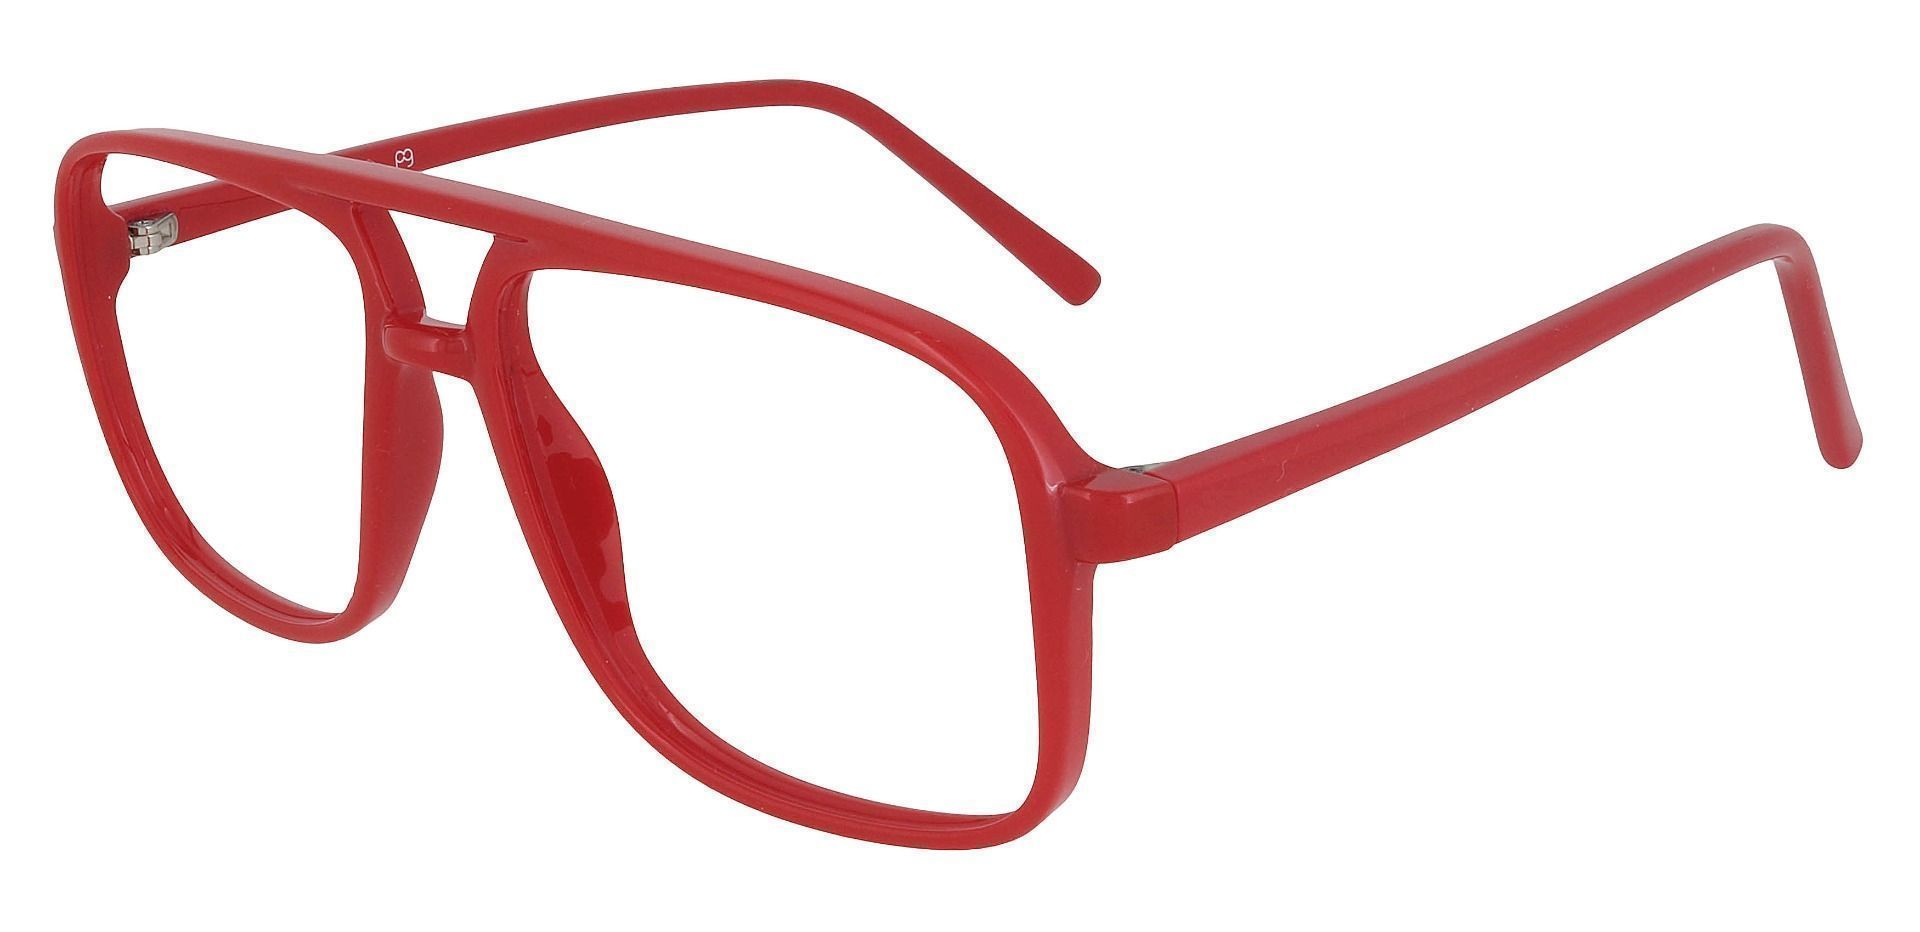 Atwood Aviator Prescription Glasses - Red